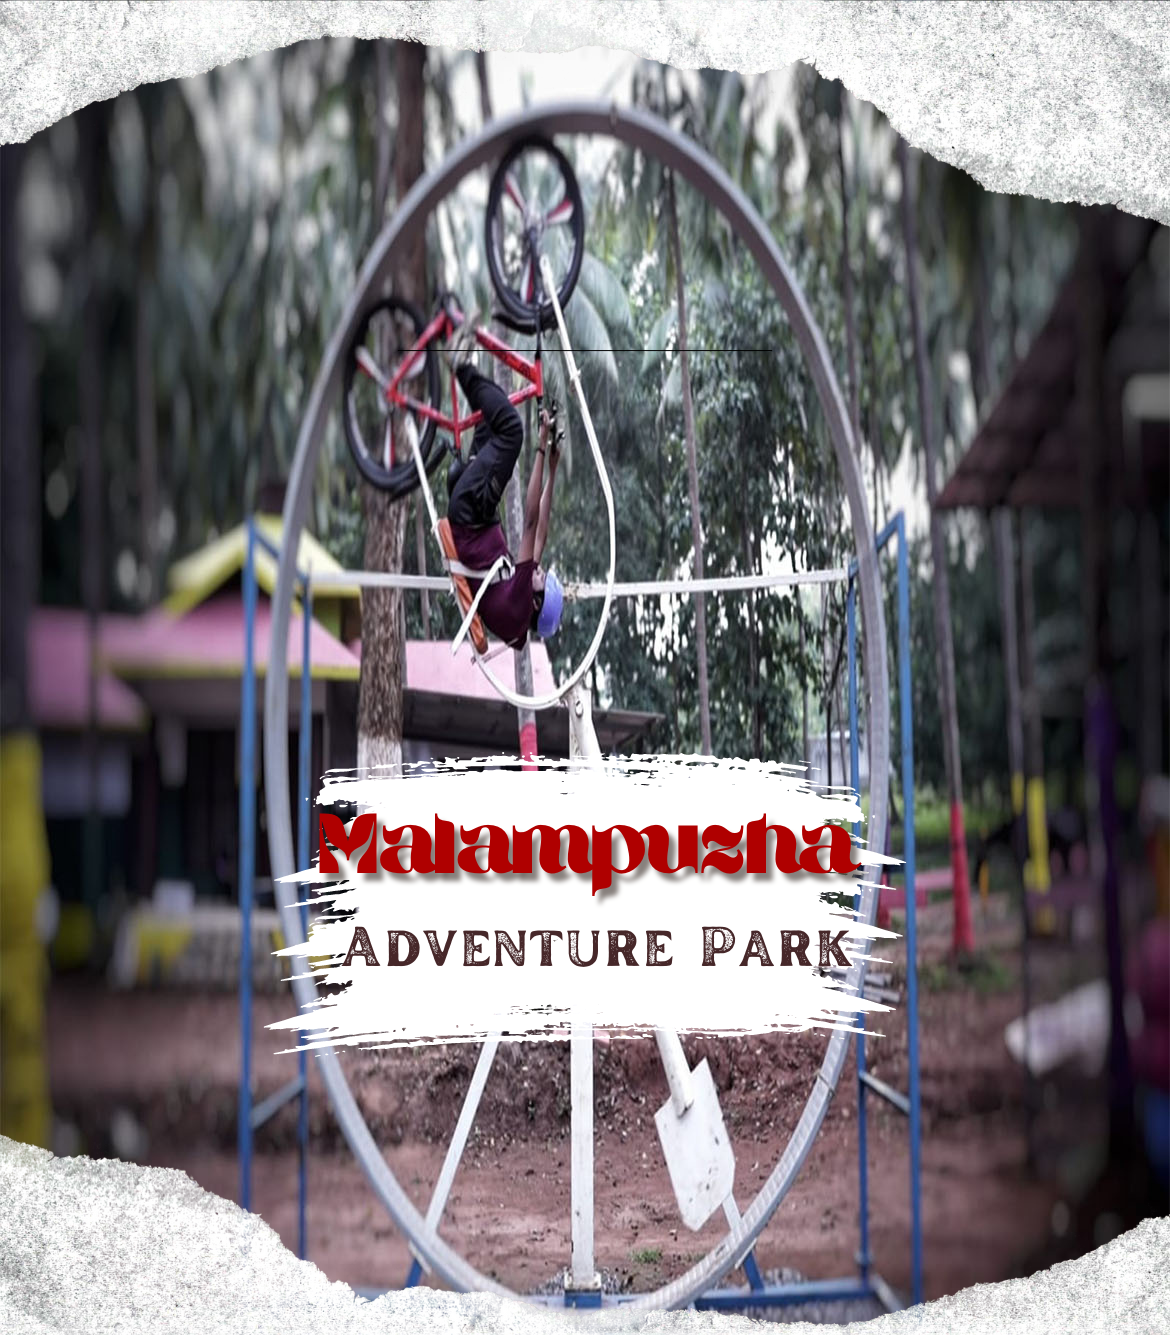 Malampuzha Adventure Park Tickets